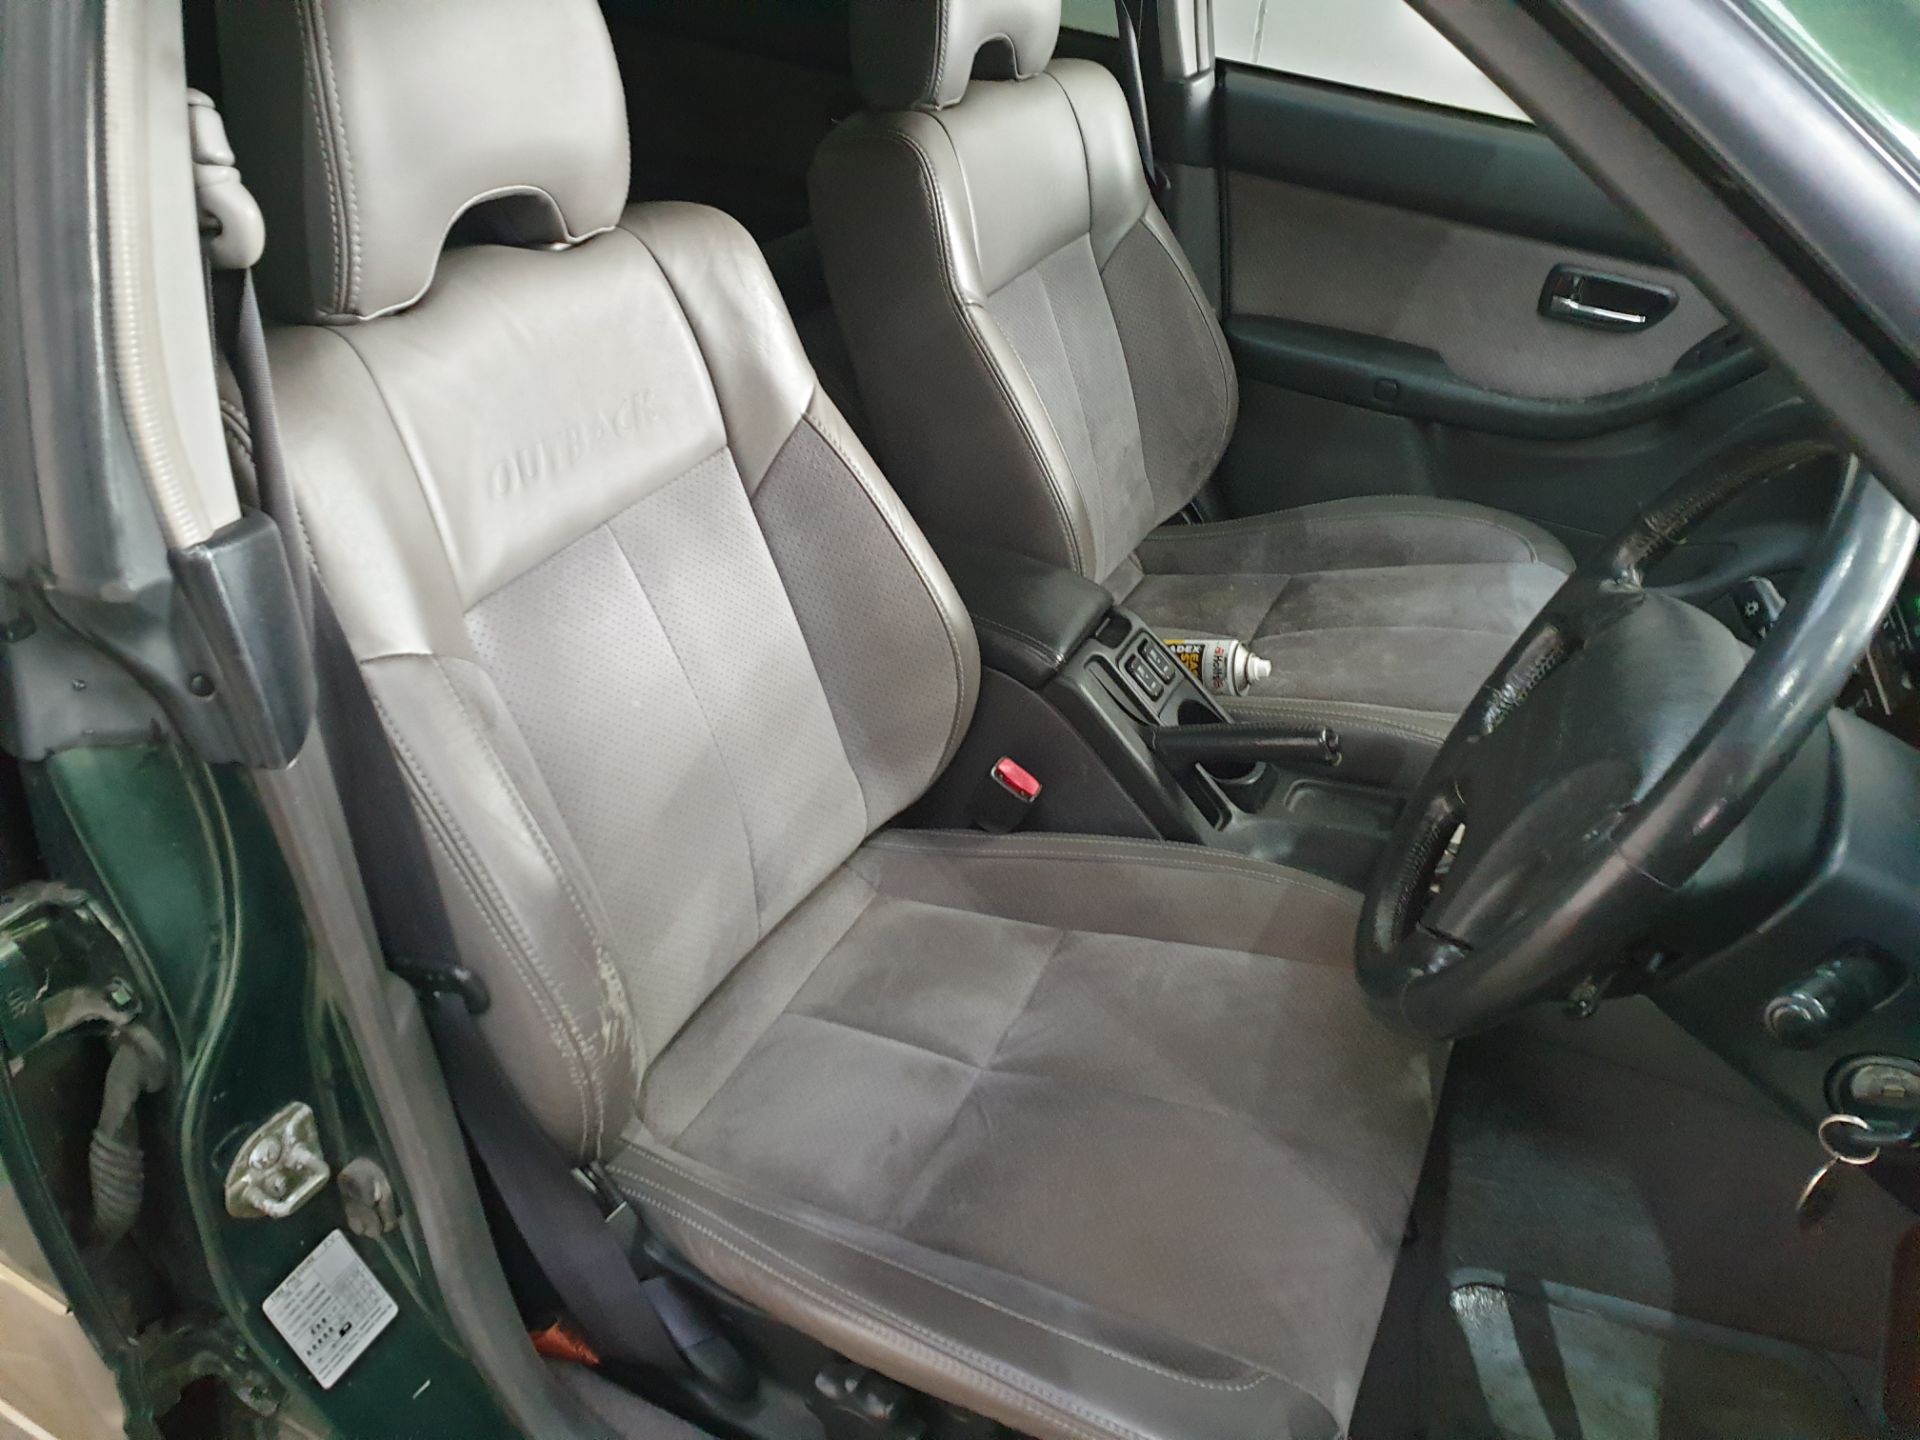 1998 Subaru Legacy estate - Image 10 of 14